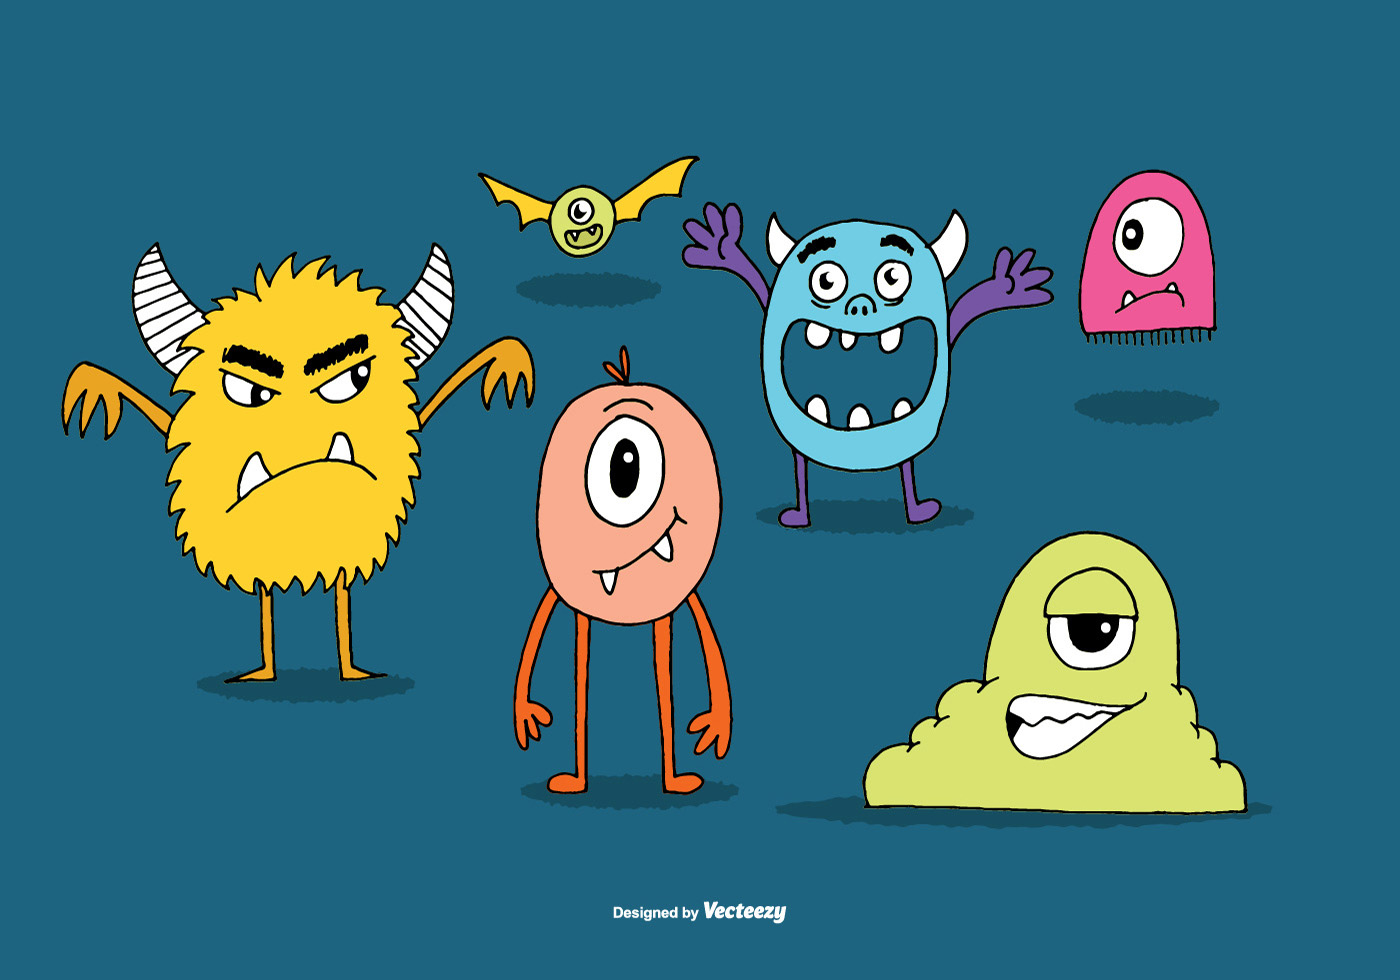 Cute Monster Vectors - Download Free Vector Art, Stock Graphics & Images